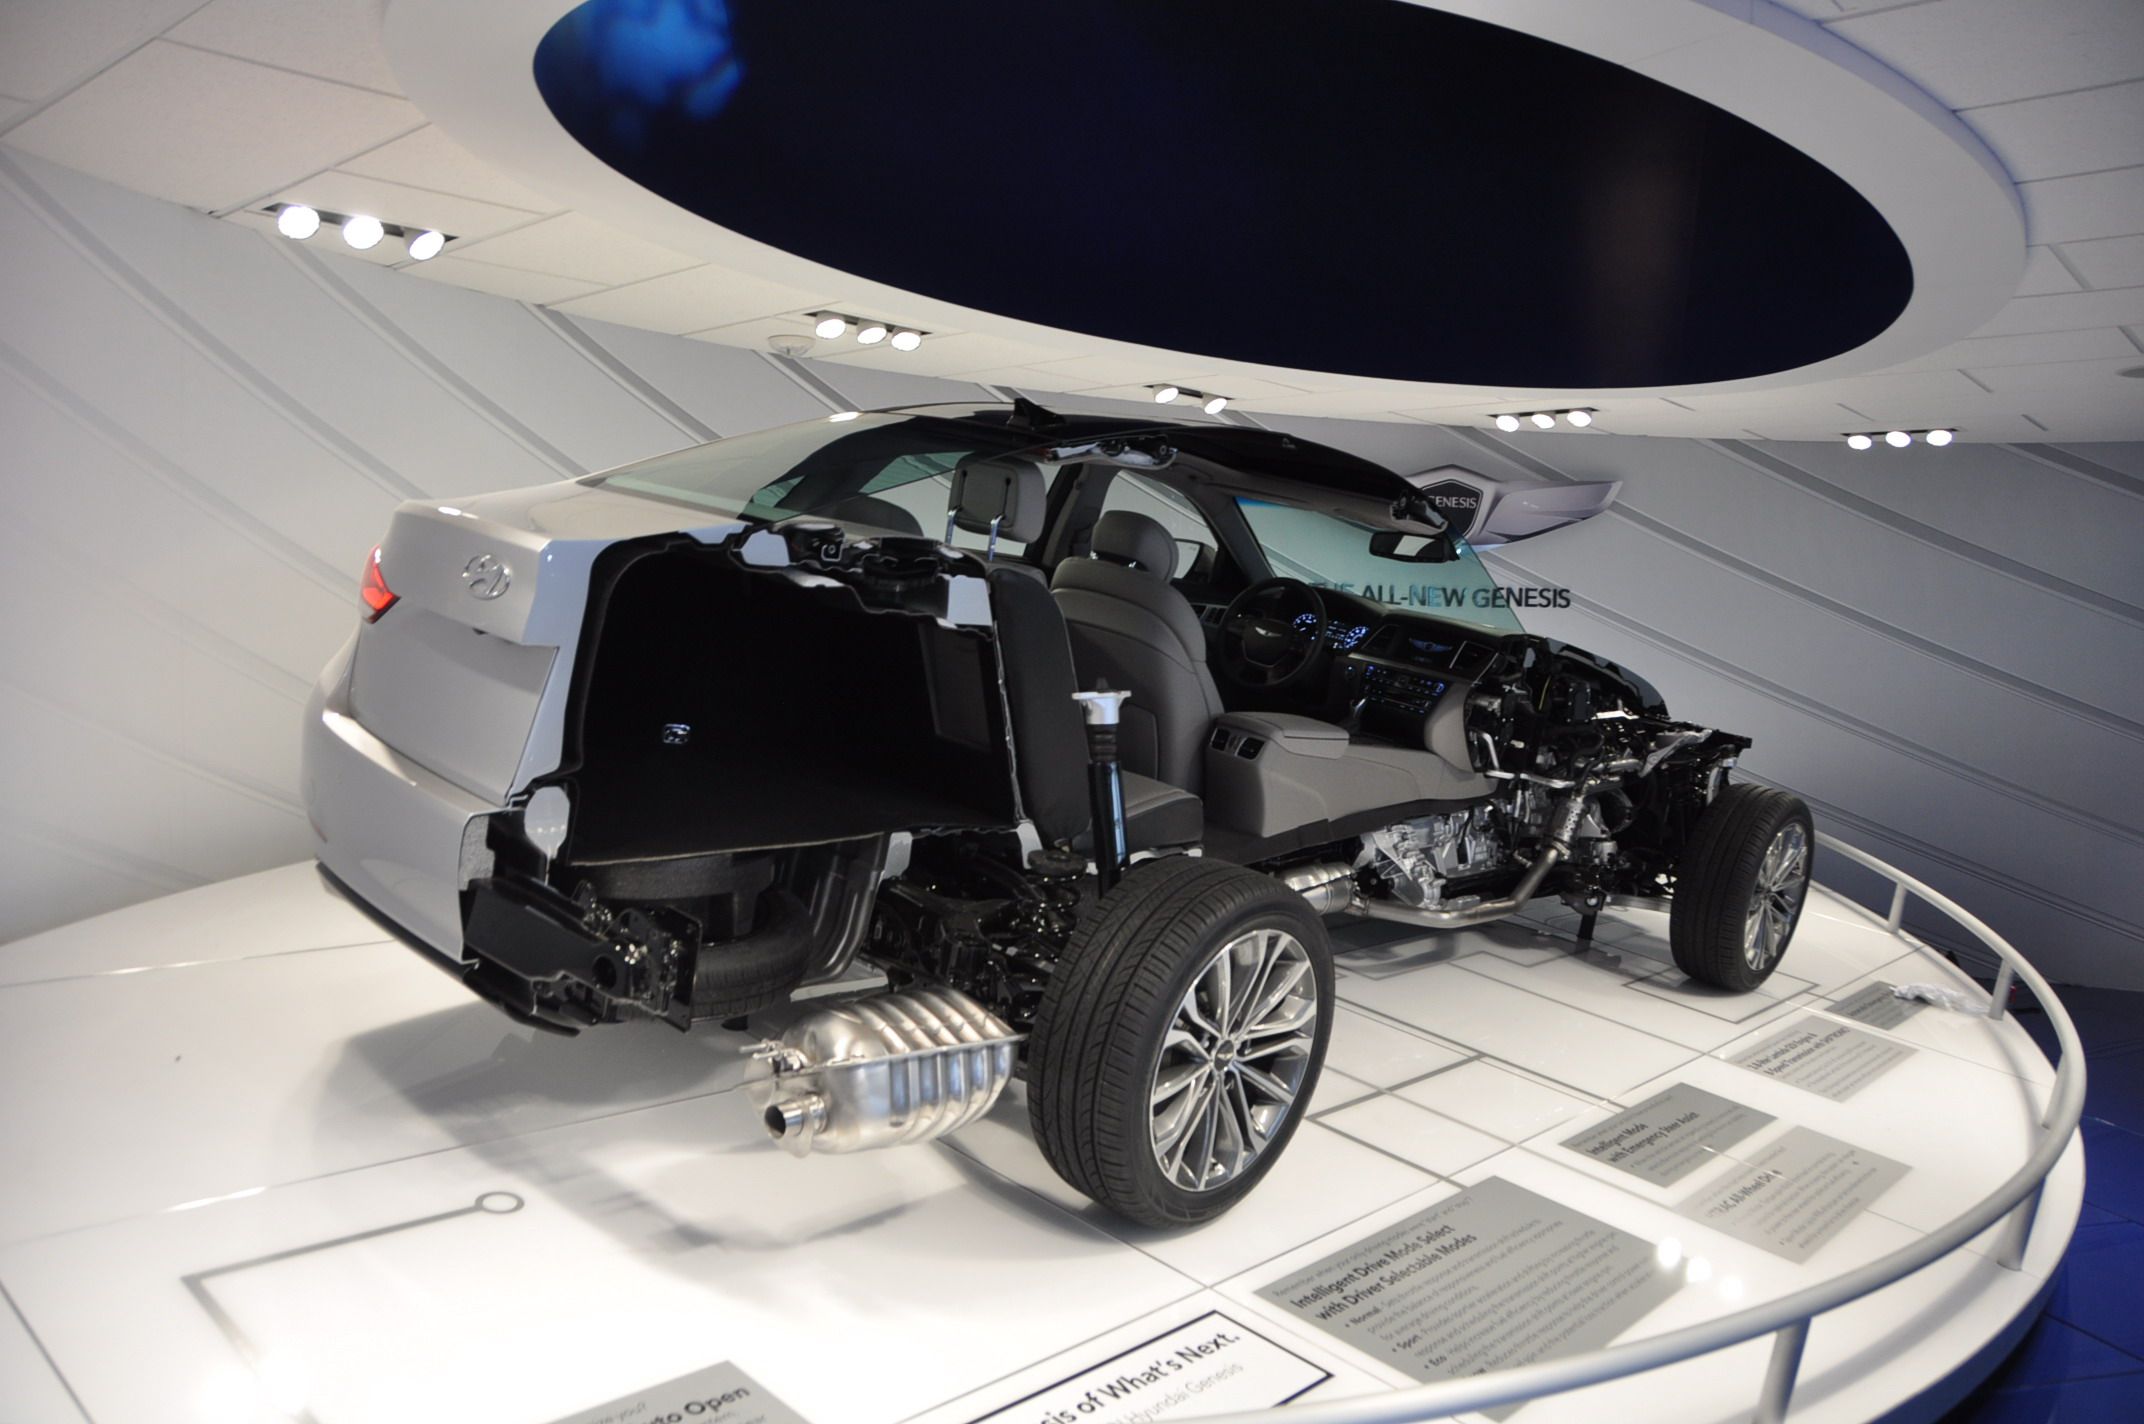 2015 - 2016 Hyundai Genesis